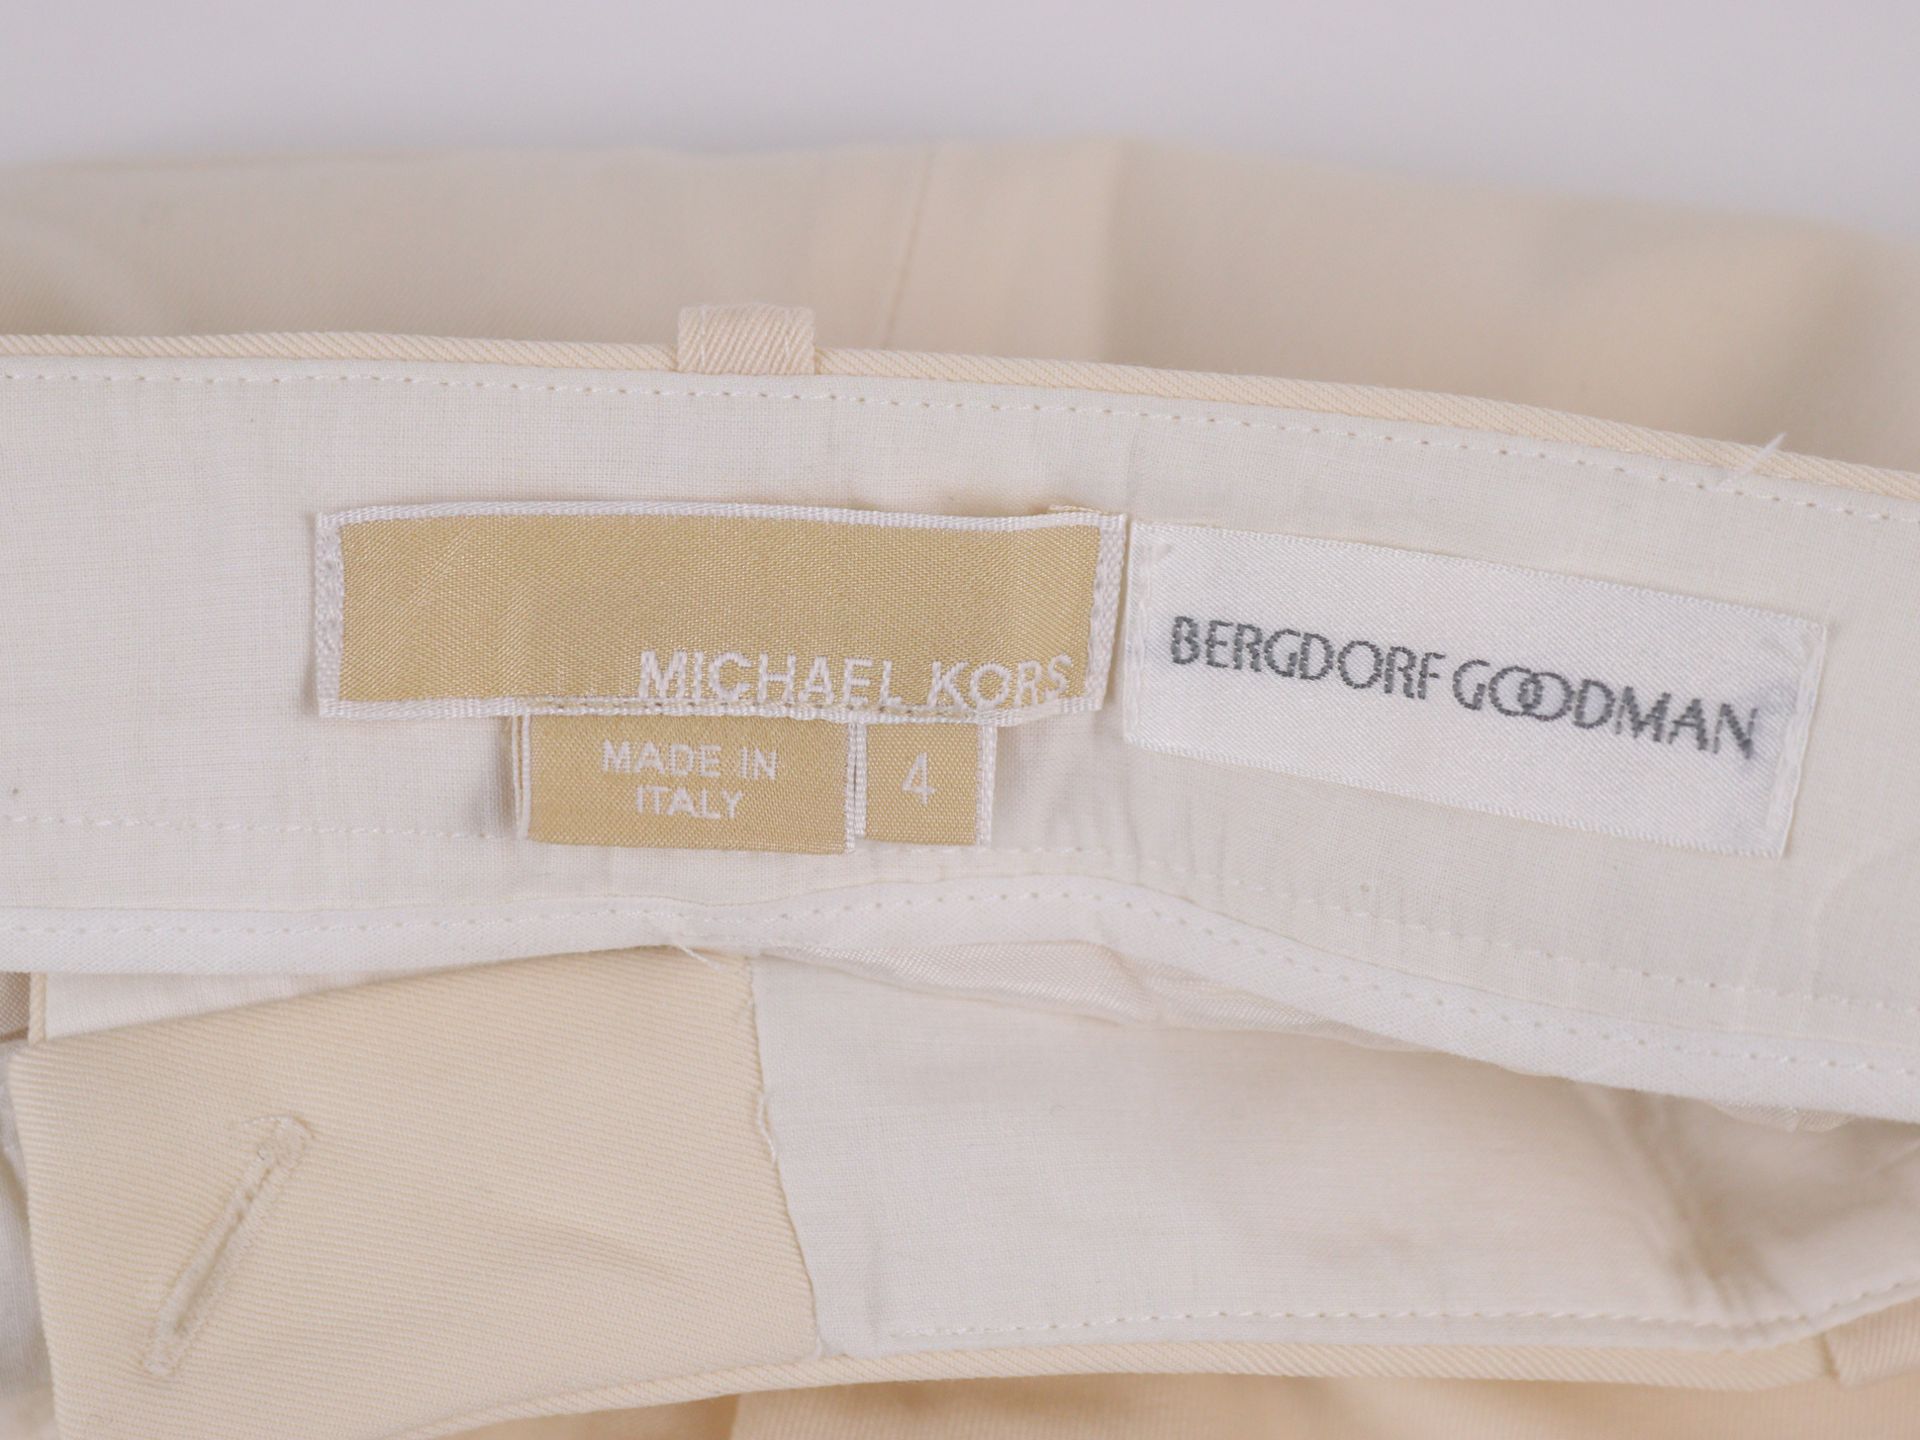 Michael Kors for Bergdorf Goodman - Bild 5 aus 5